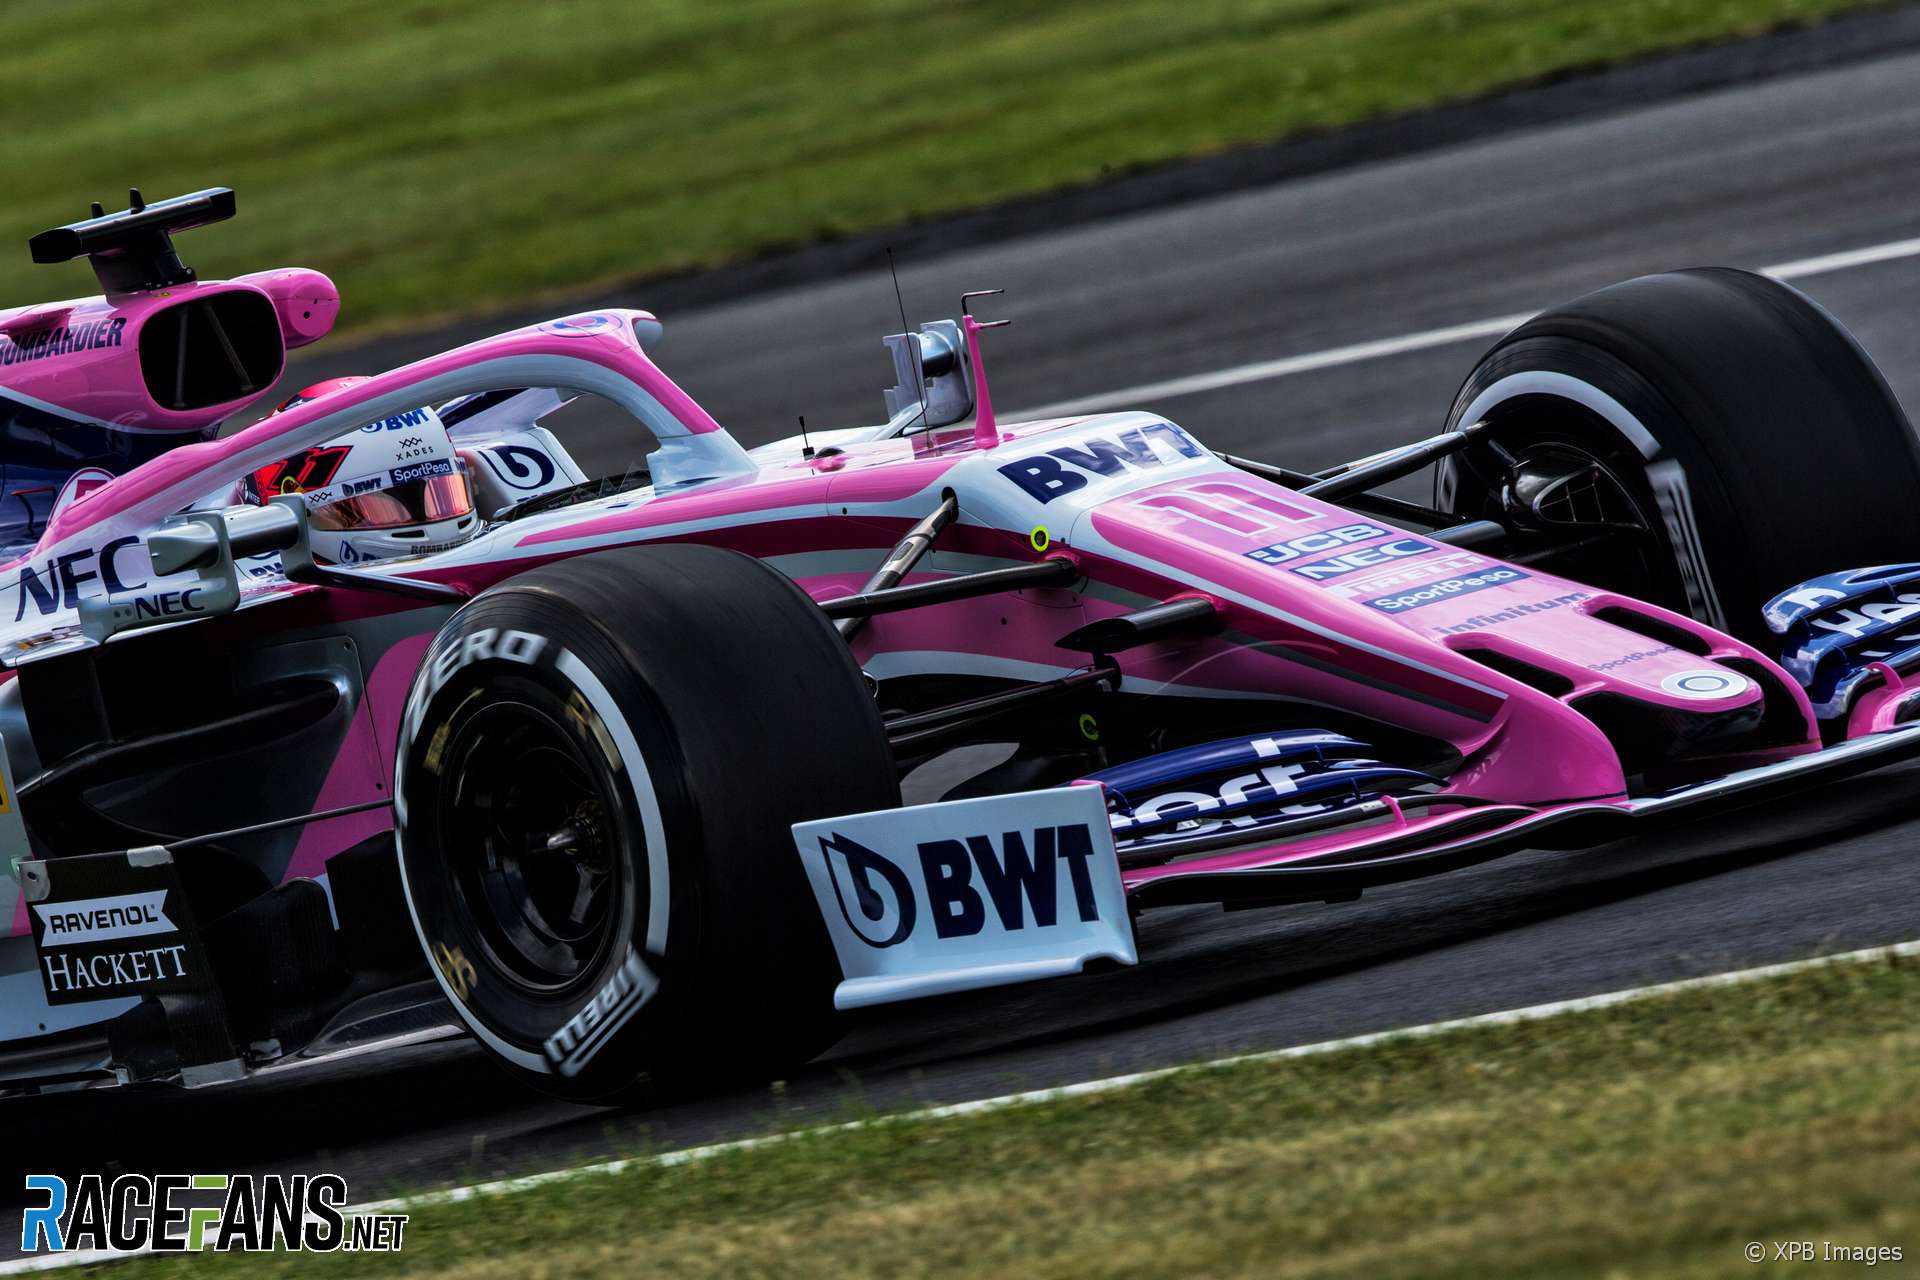 Sergio Perez, Racing Point, Silverstone, 2019